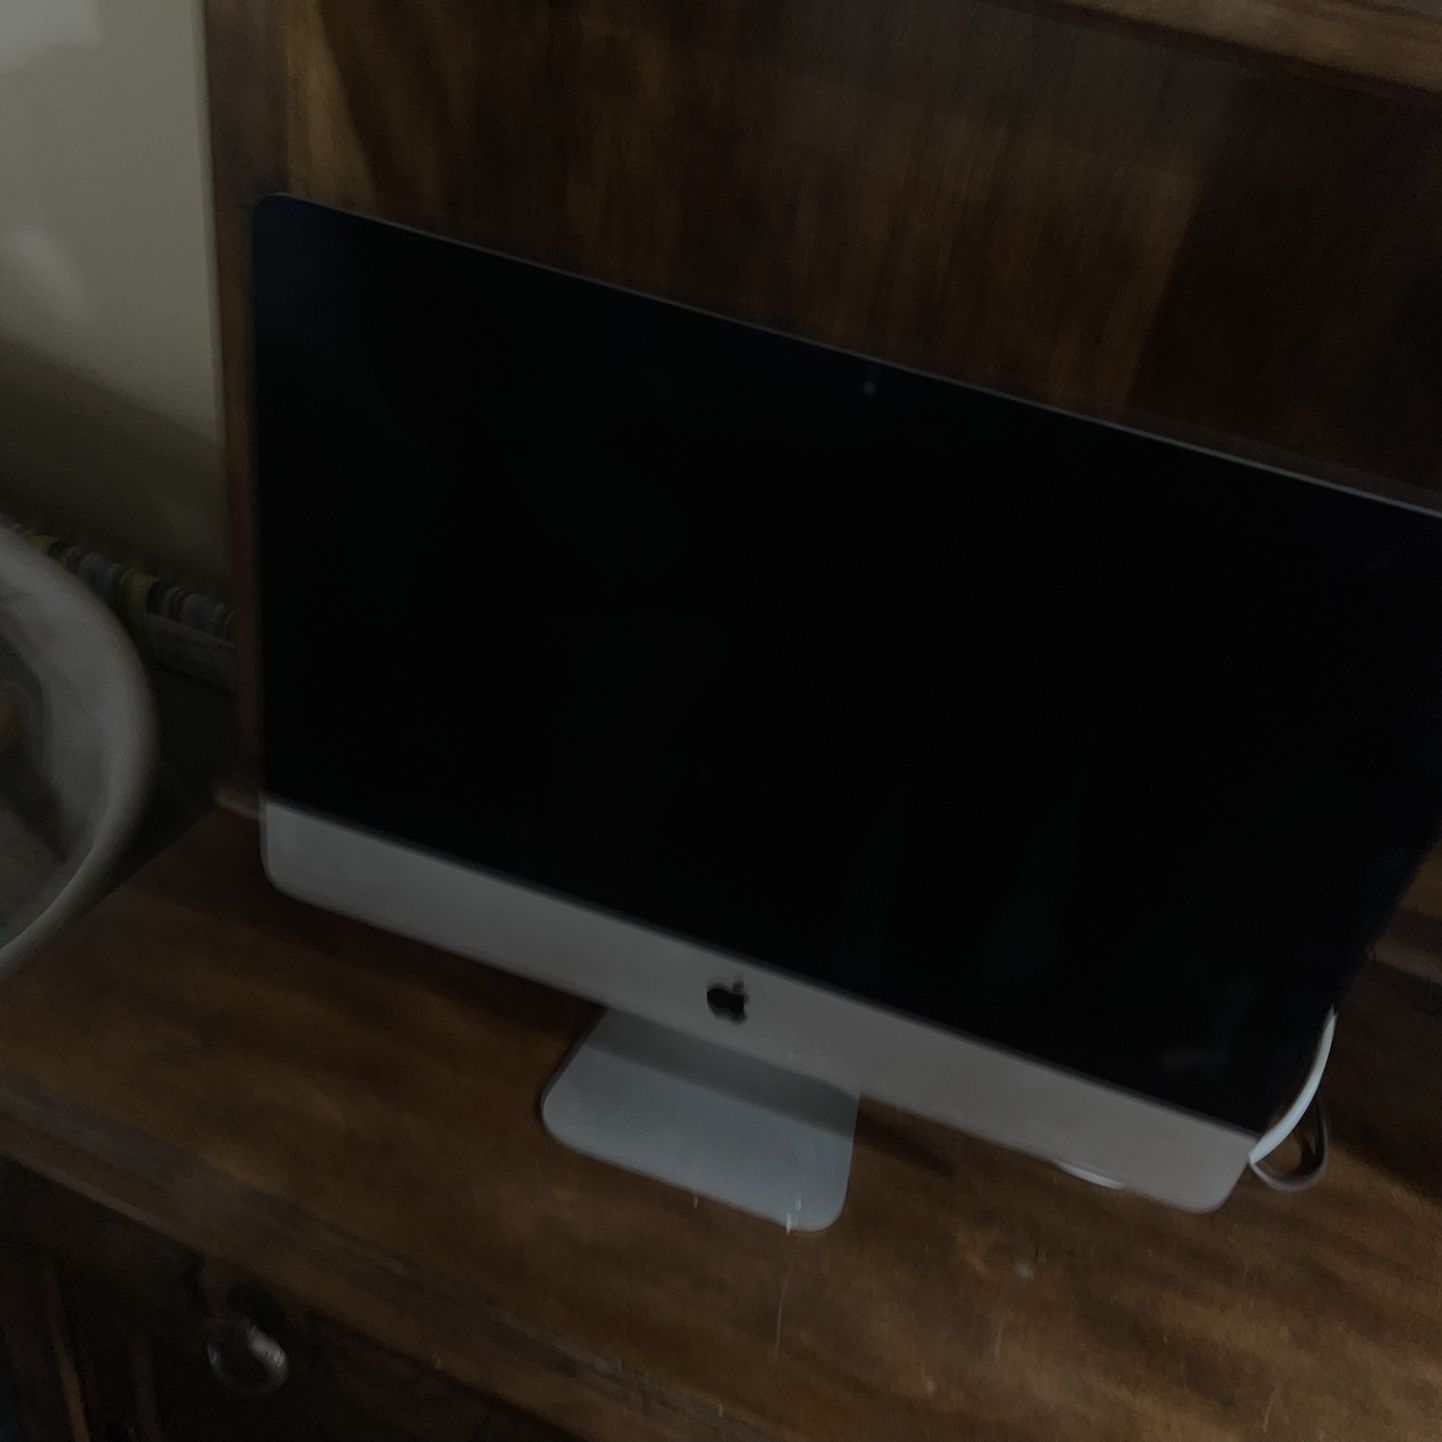 Late 2015 model iMac